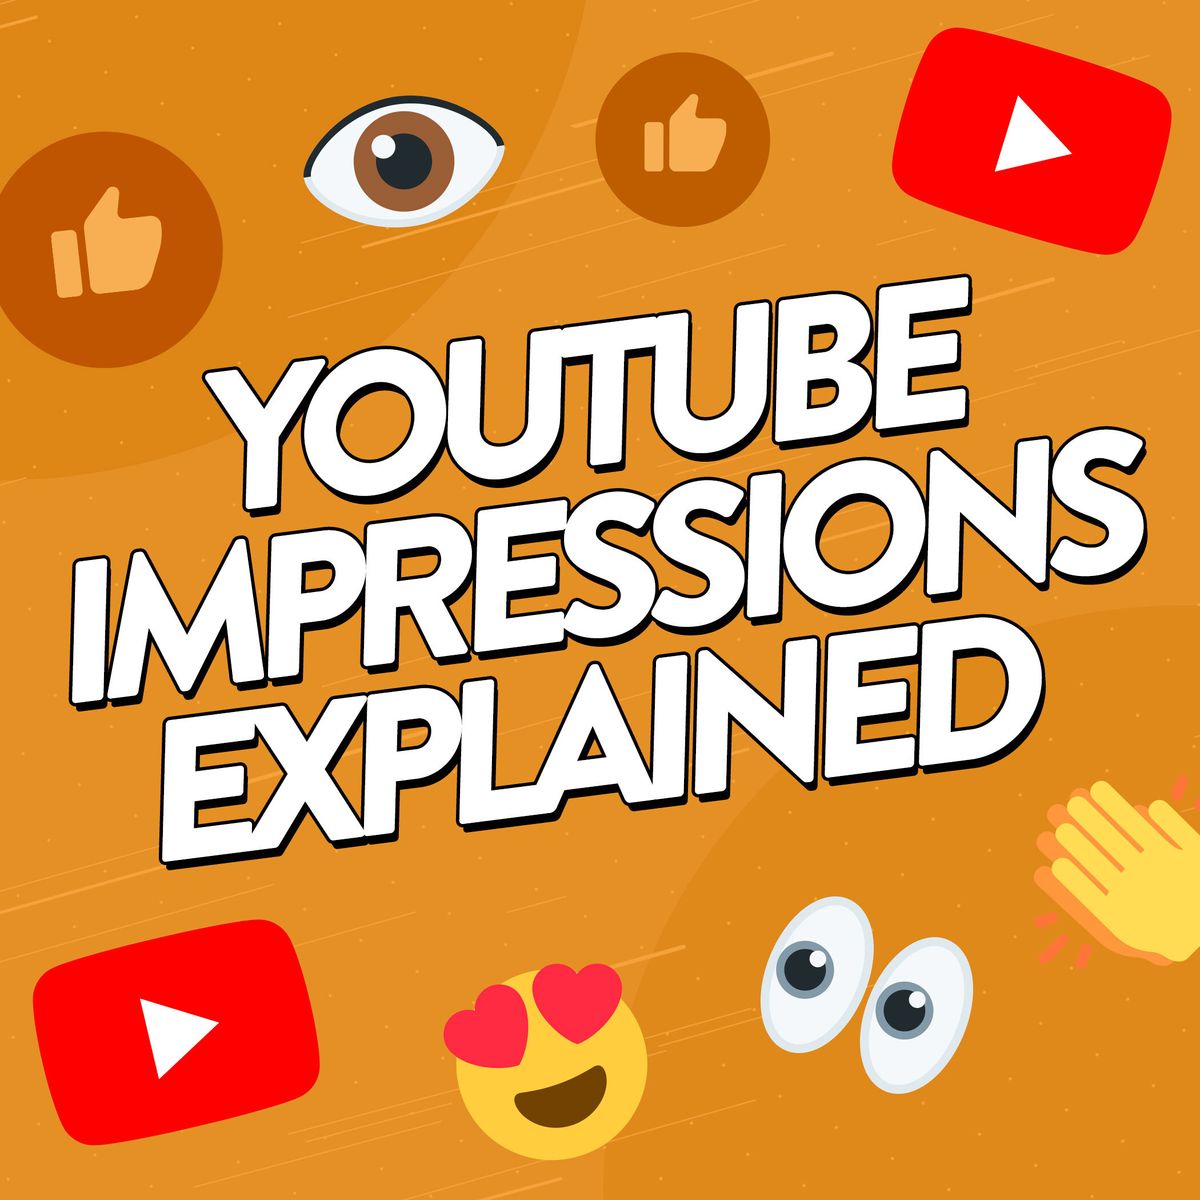 Image to accompany article explaining what impressions on YouTube are.